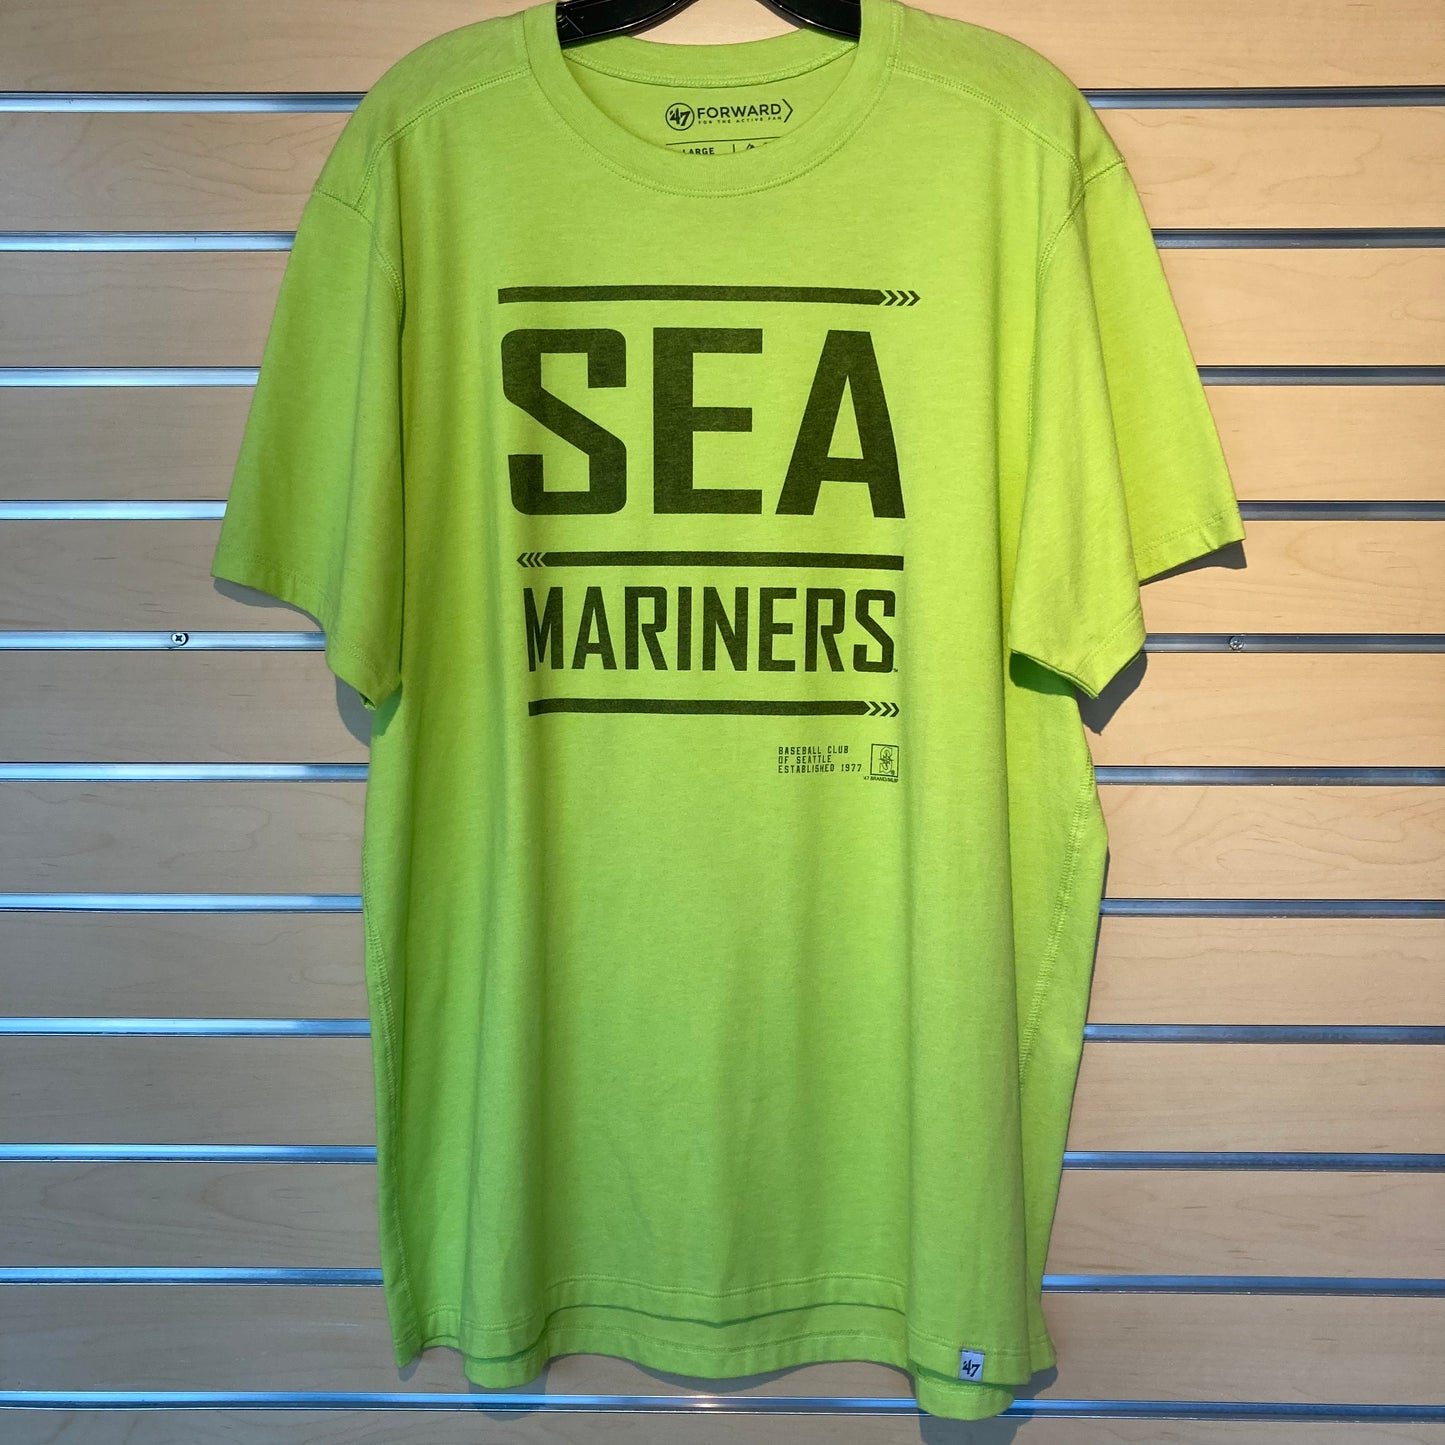 Mariners Turbo Dry-Fit SEA Shirt